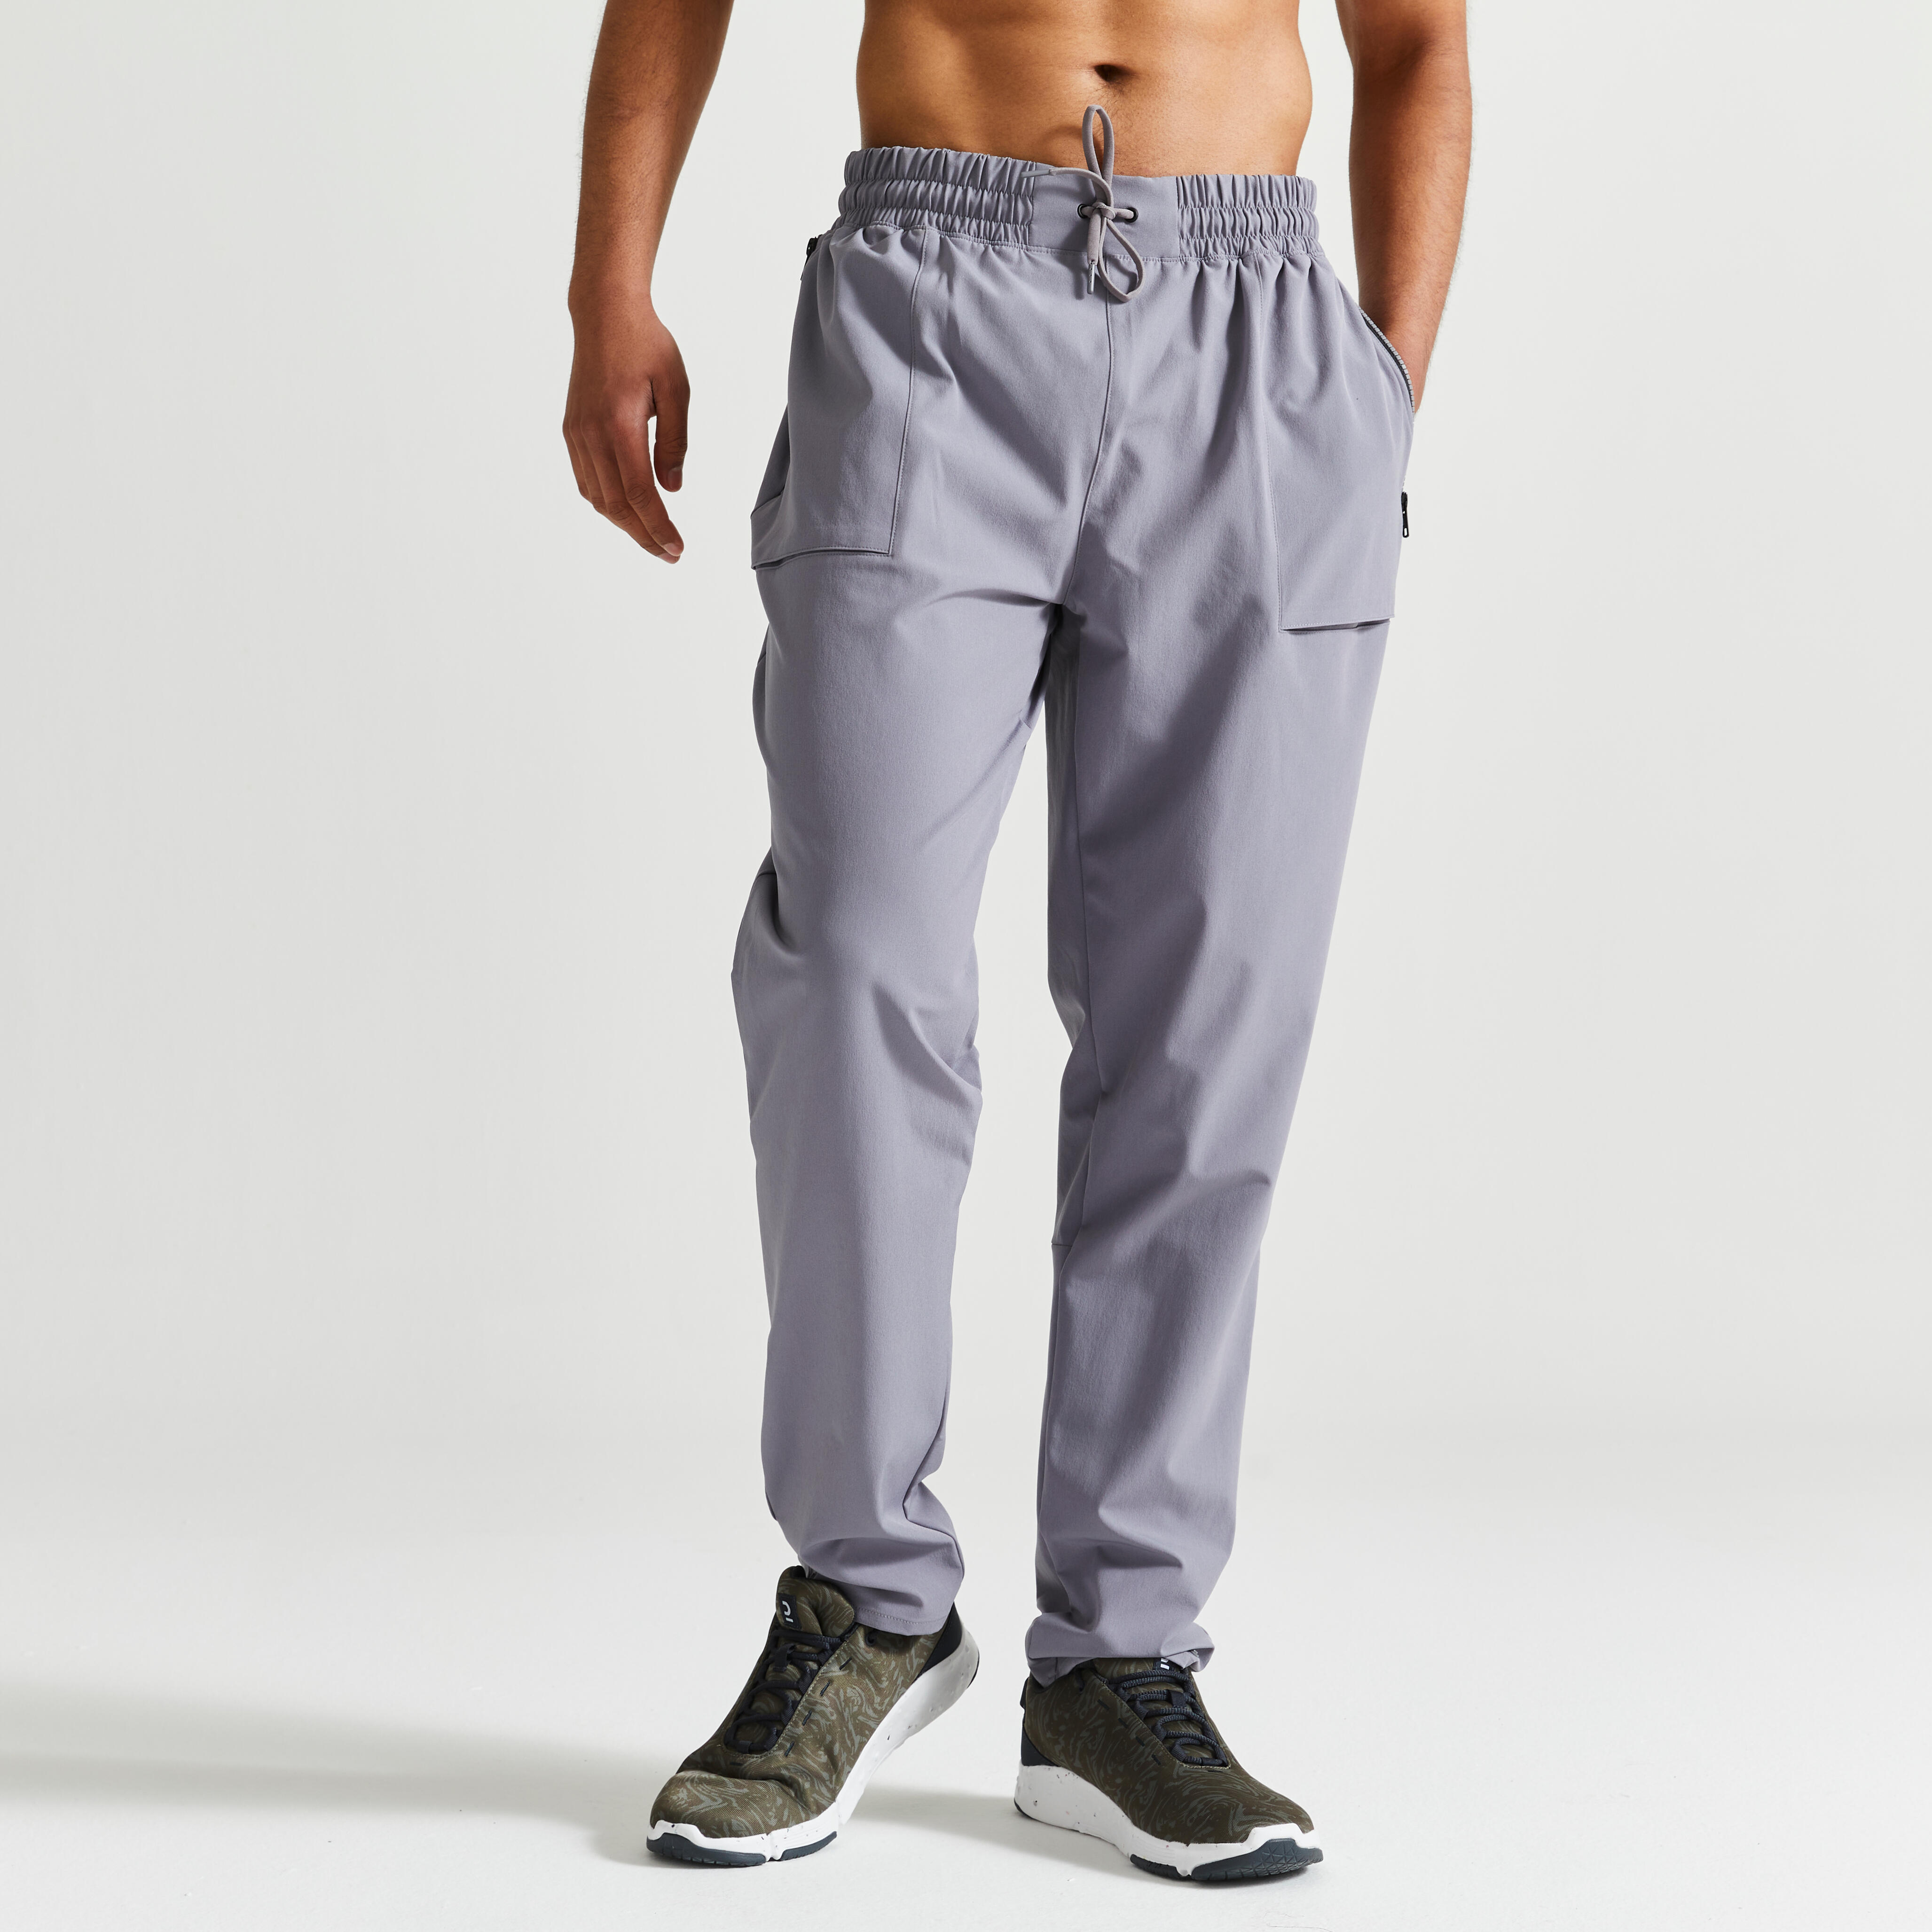 Decathlon (Kalenji) Workout Pants Size S Women Pink With Zip Pockets | eBay